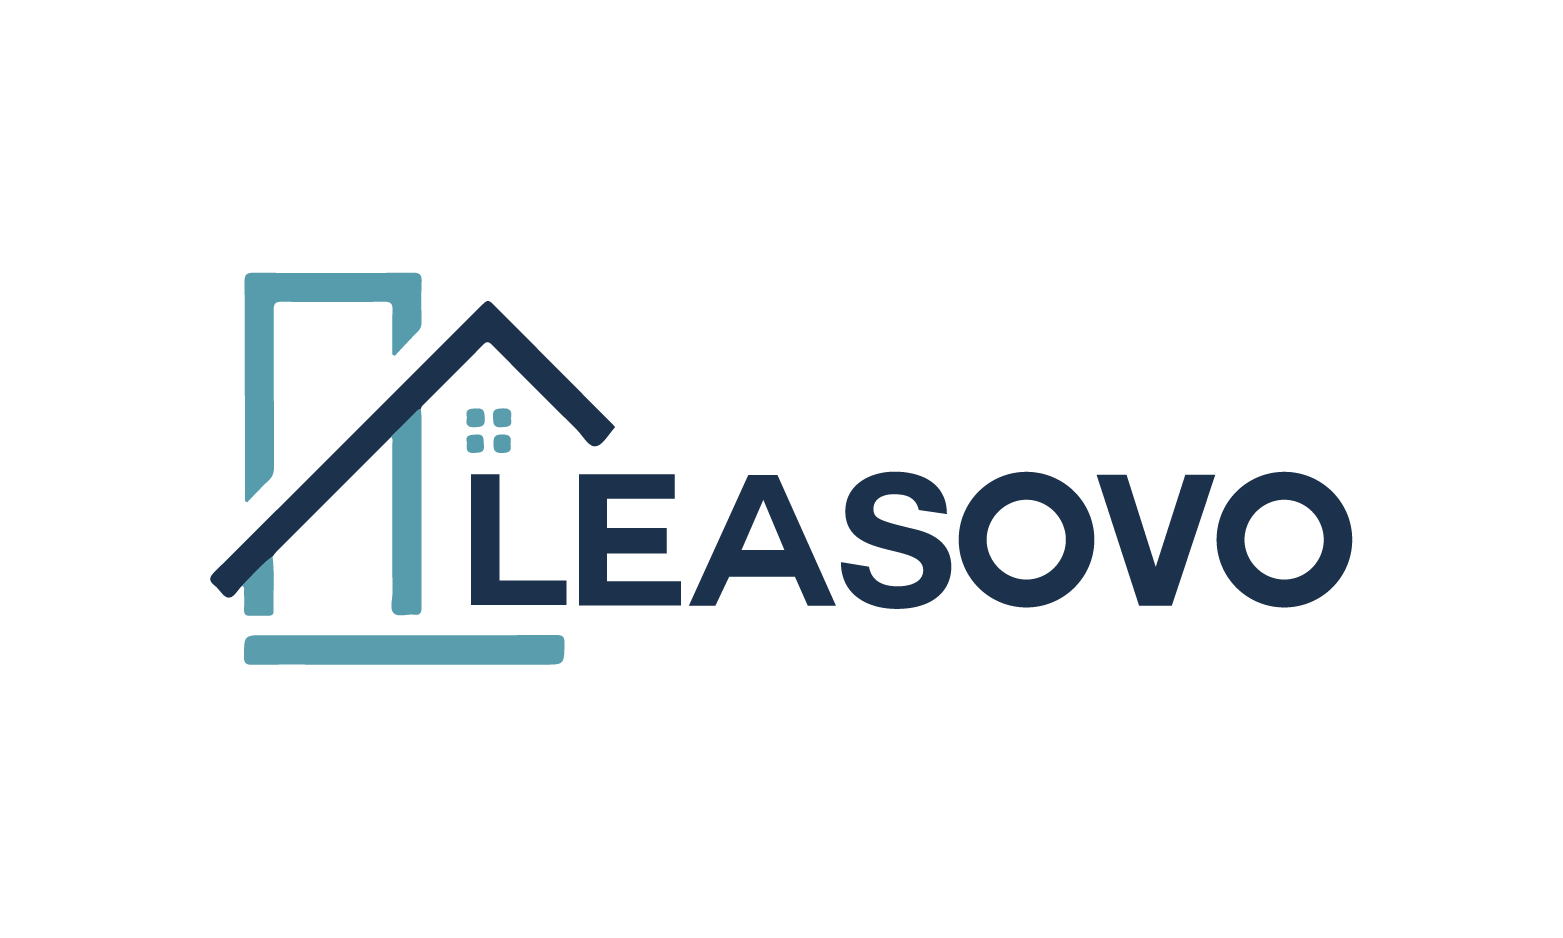 Leasovo.com - Creative brandable domain for sale